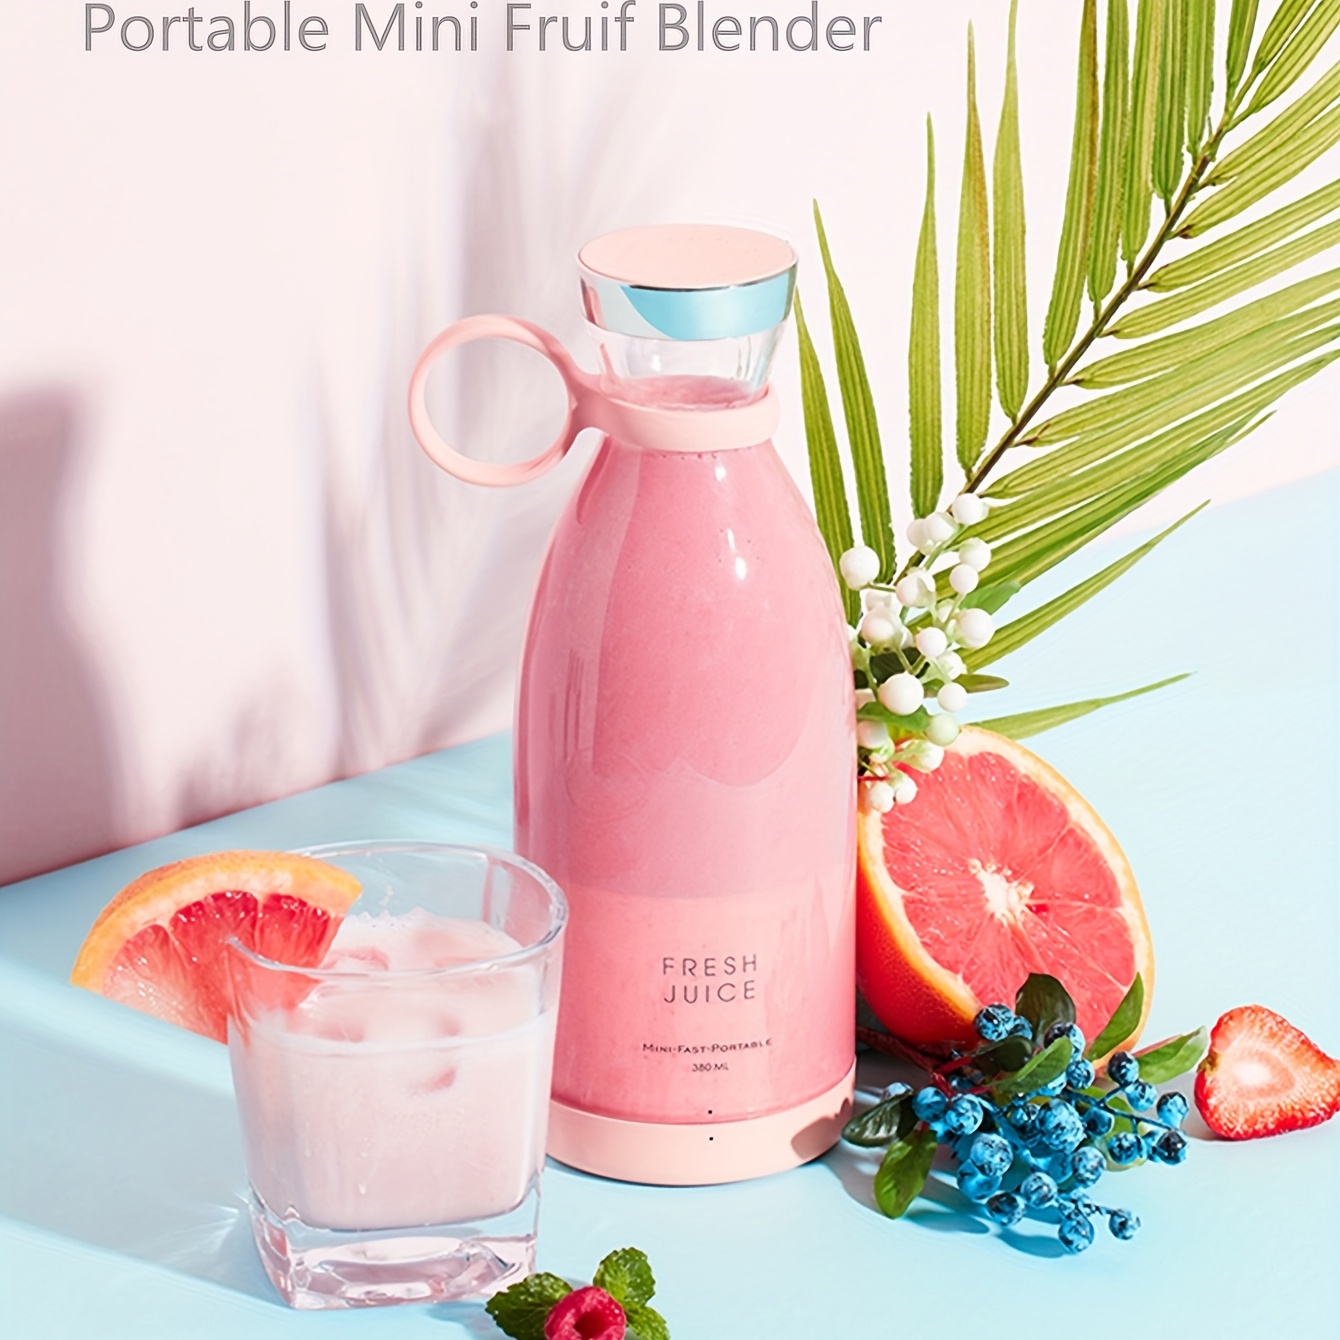  juicer blender small fruit juicer blender juice extractor  Portable USB Rechargeable 500ml (Pink): Home & Kitchen